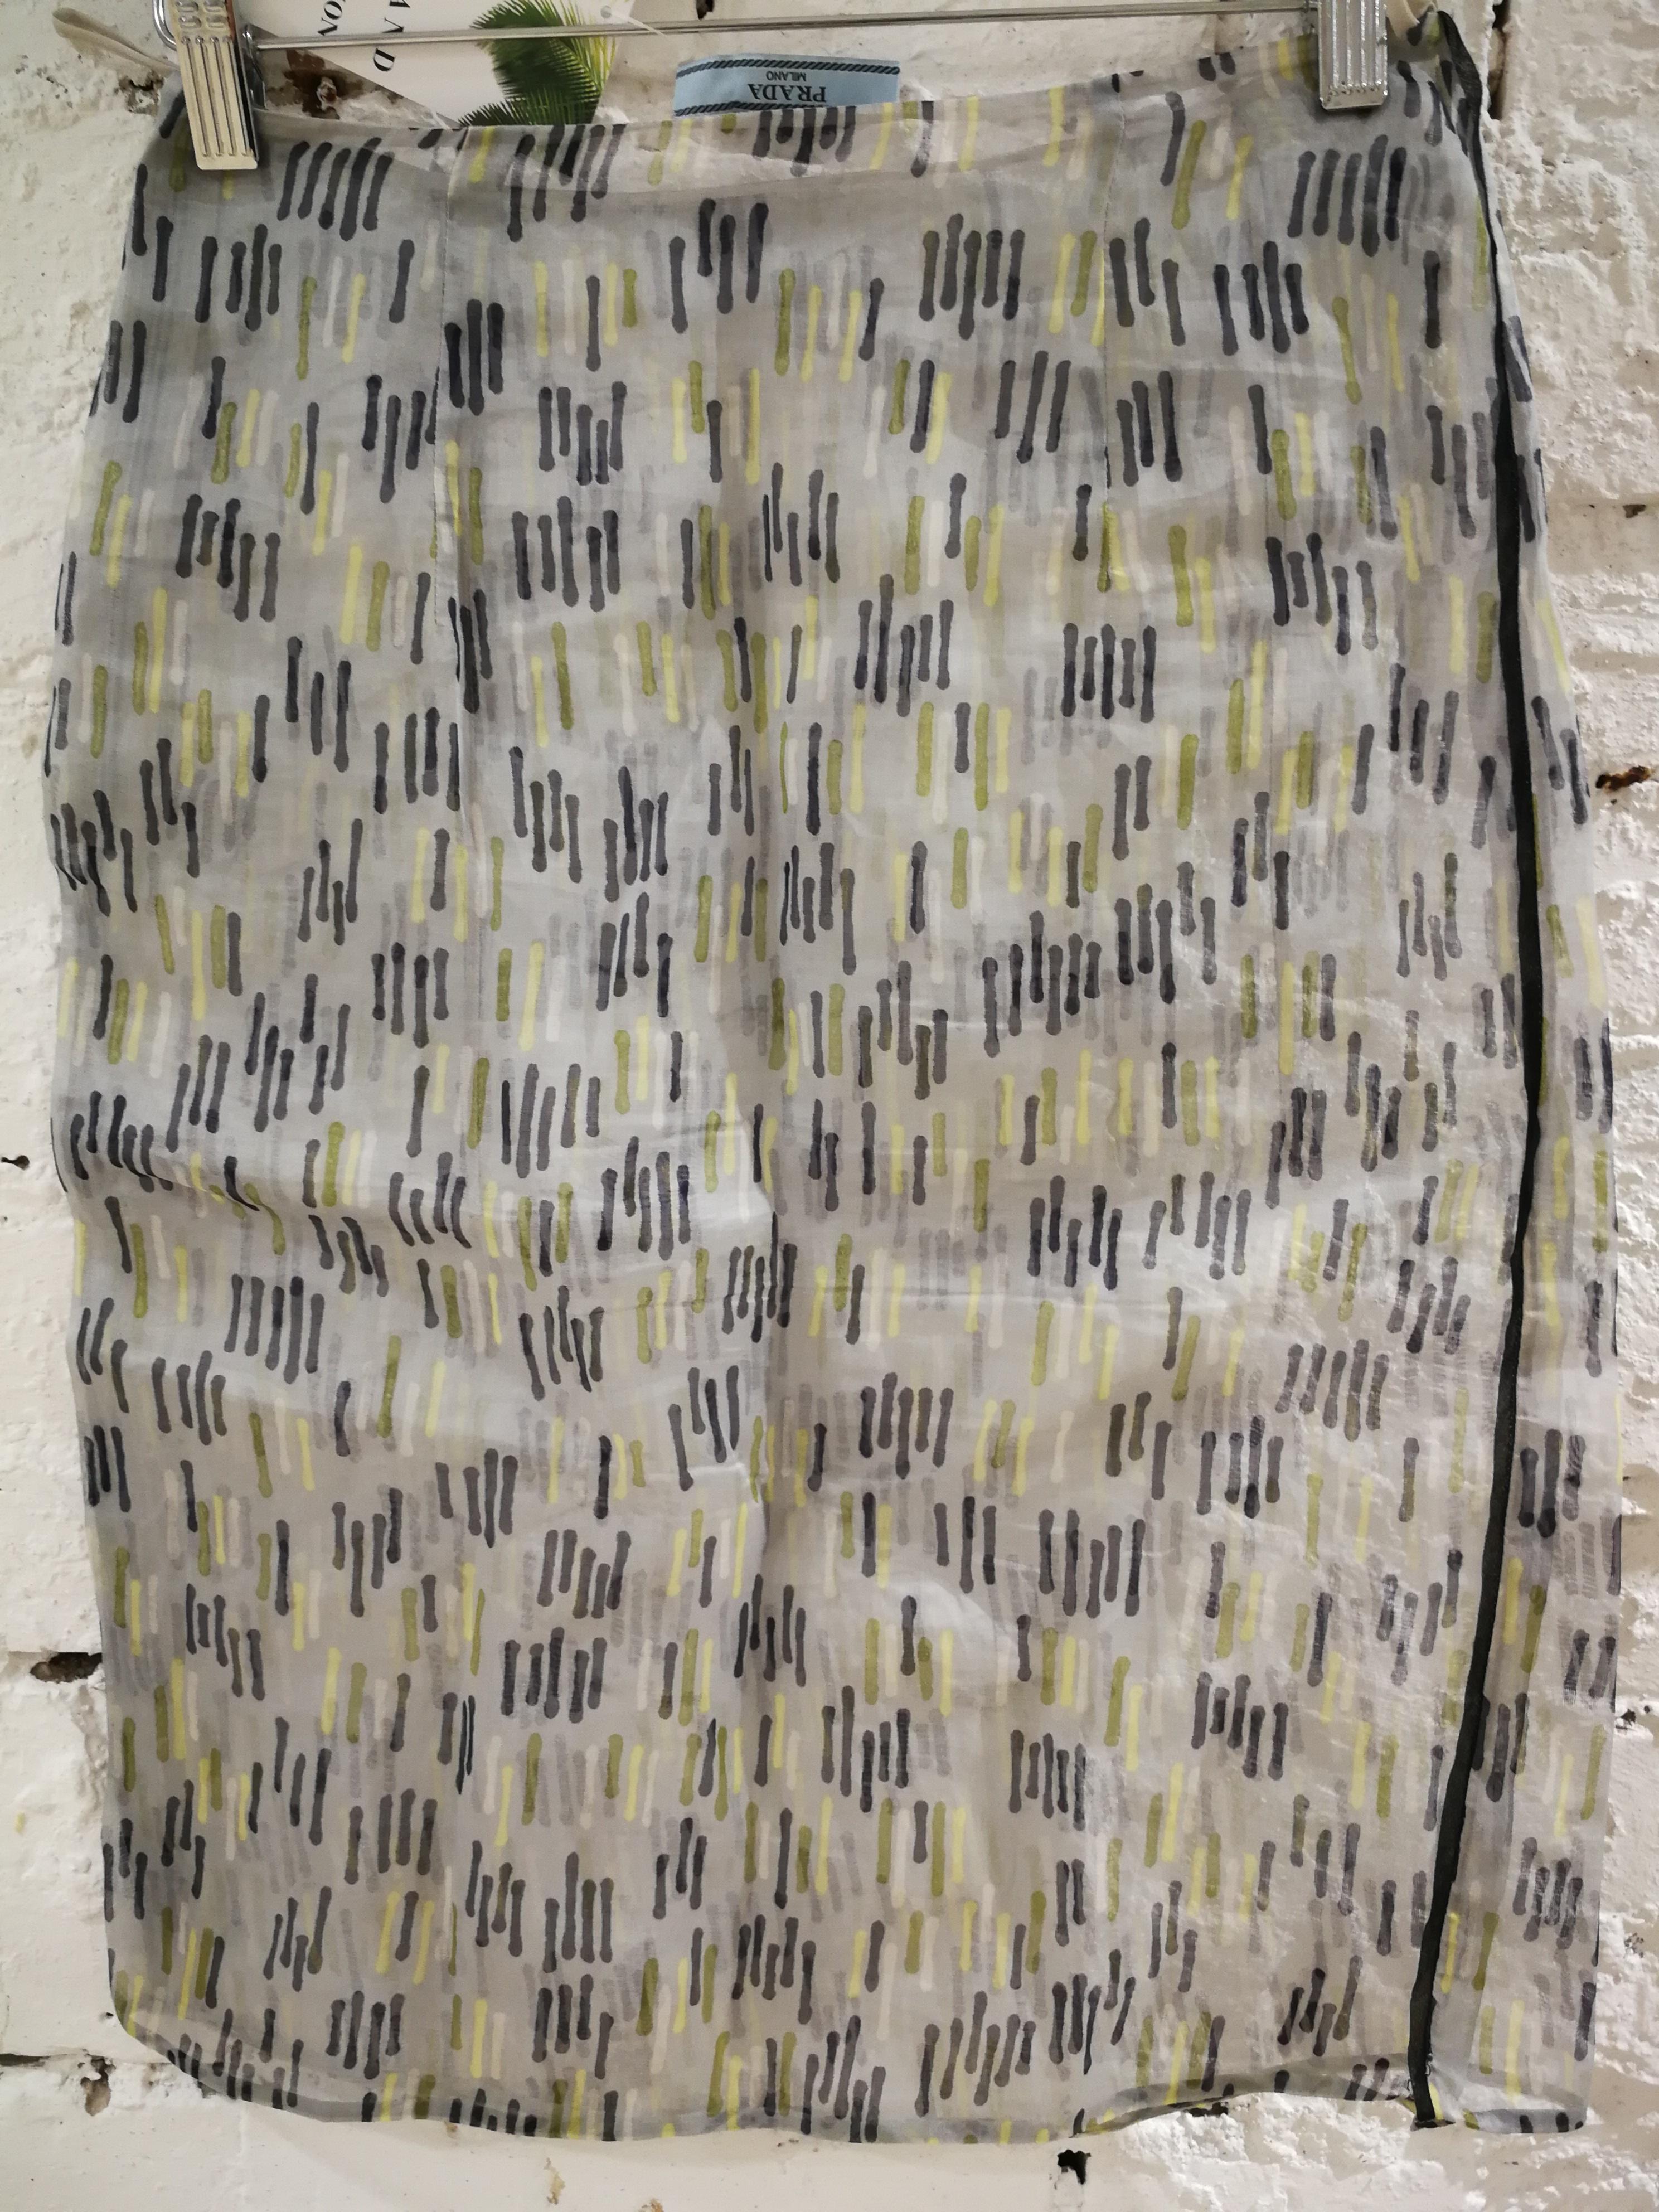 Prada See through Skirt

totally made in italy

WaisT: 70 cm 
lenght 58 cm